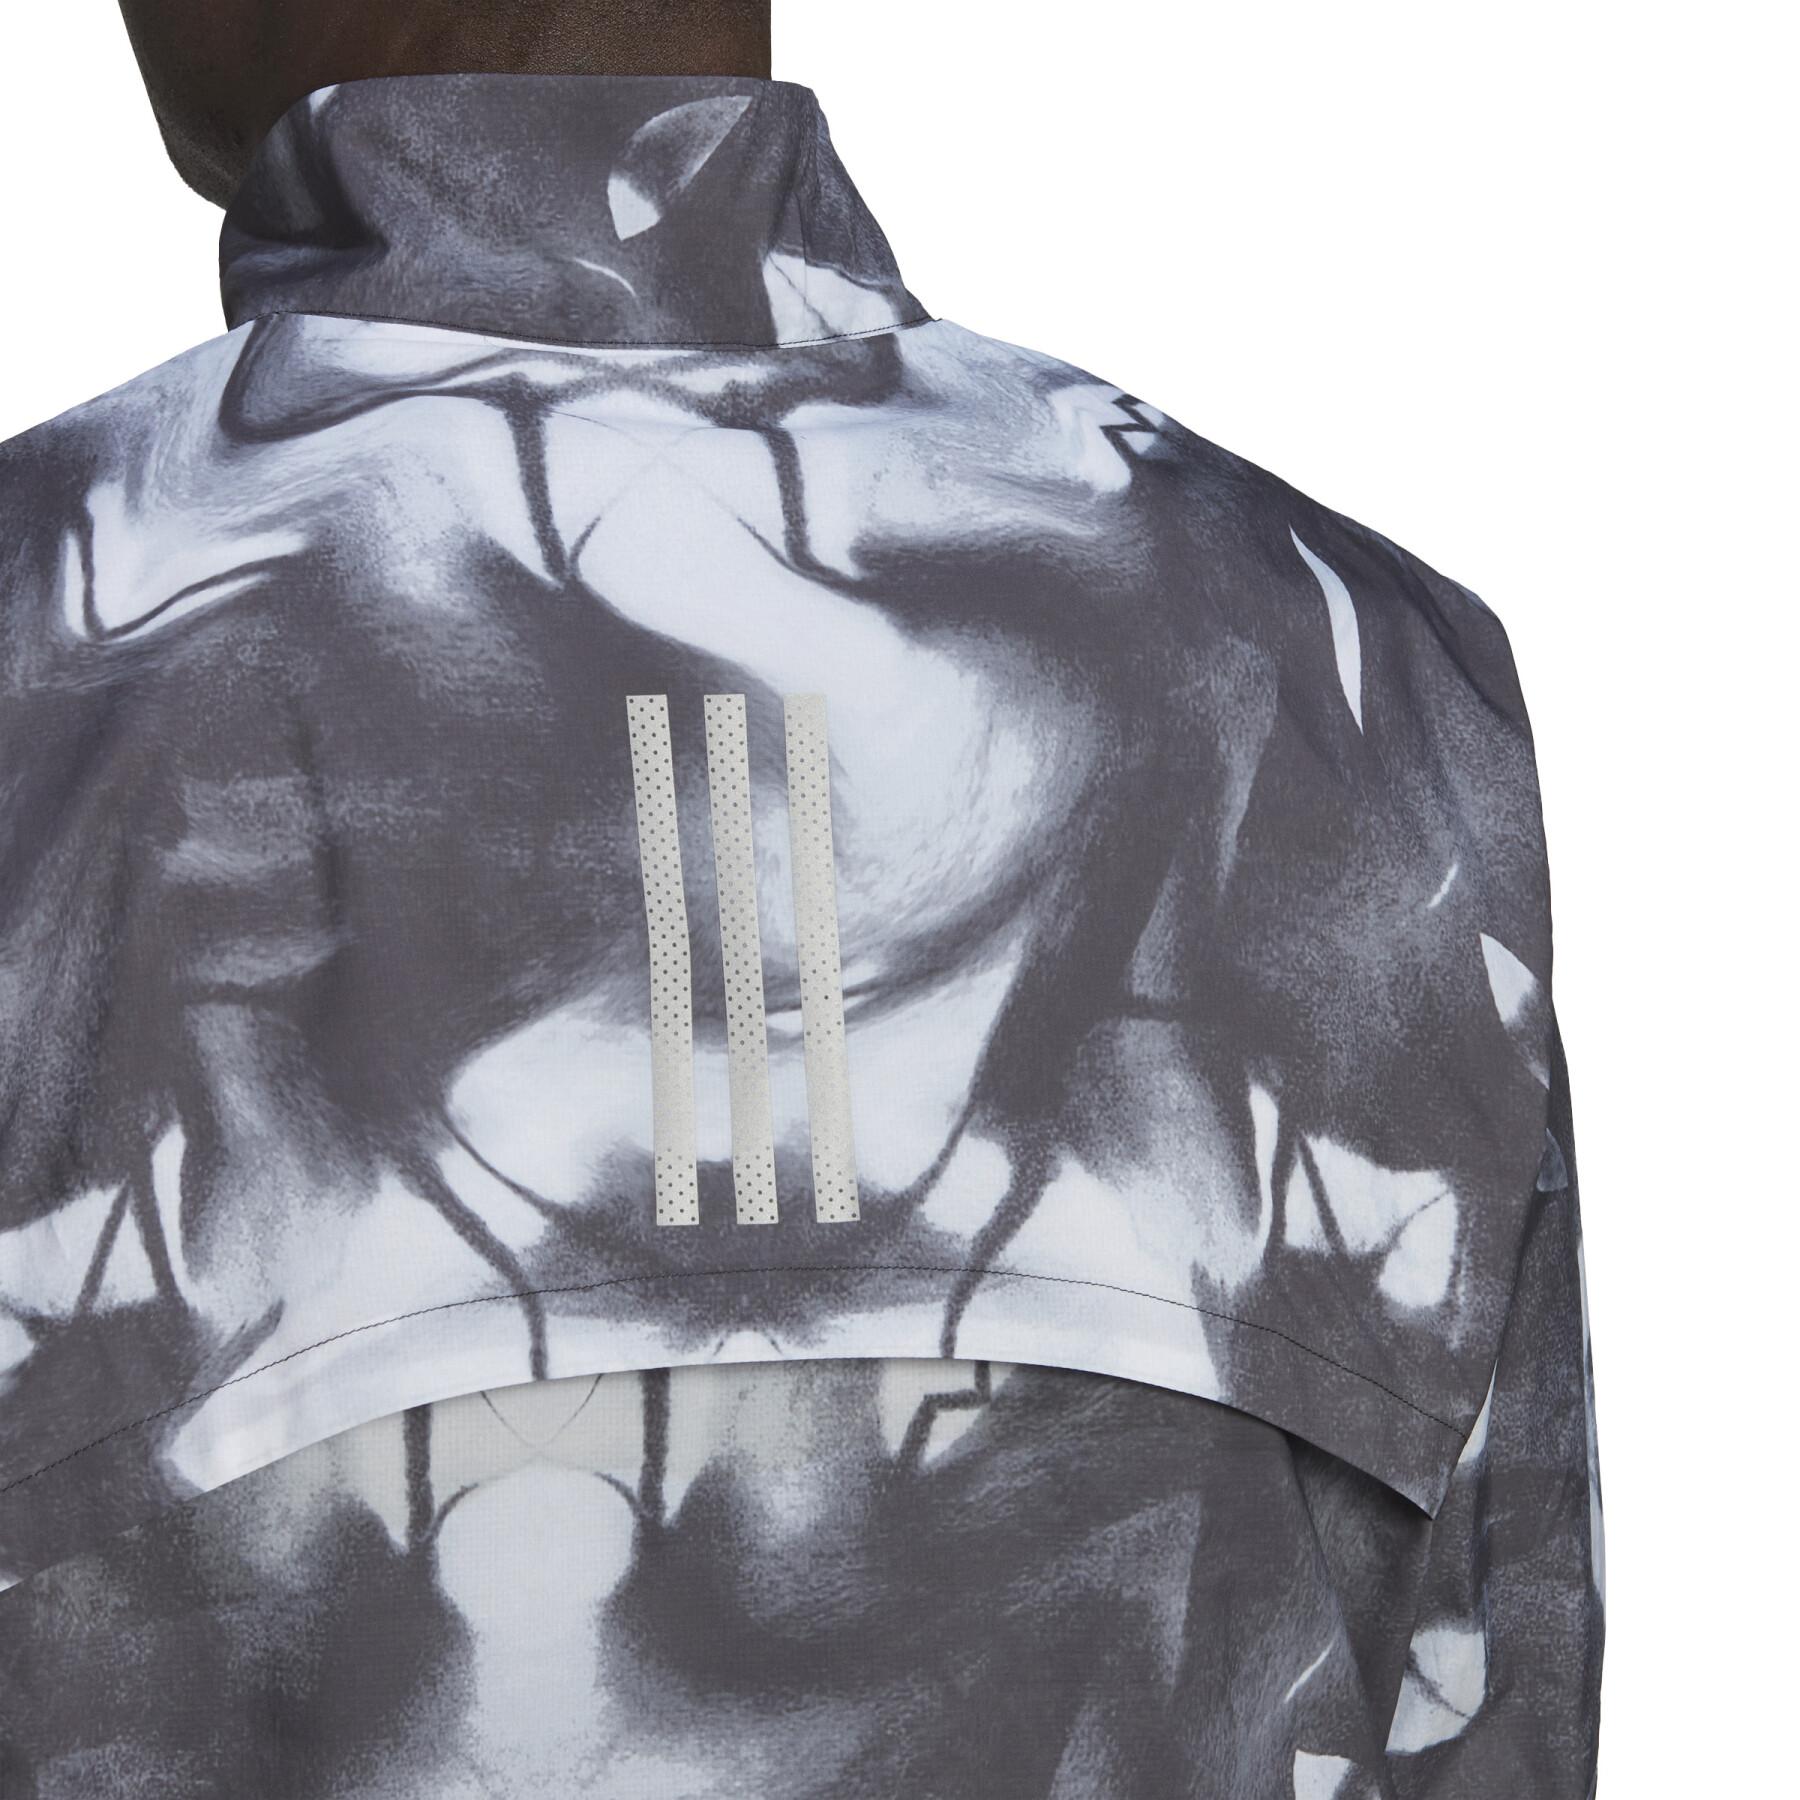 Translucent waterproof jacket adidas Marathon